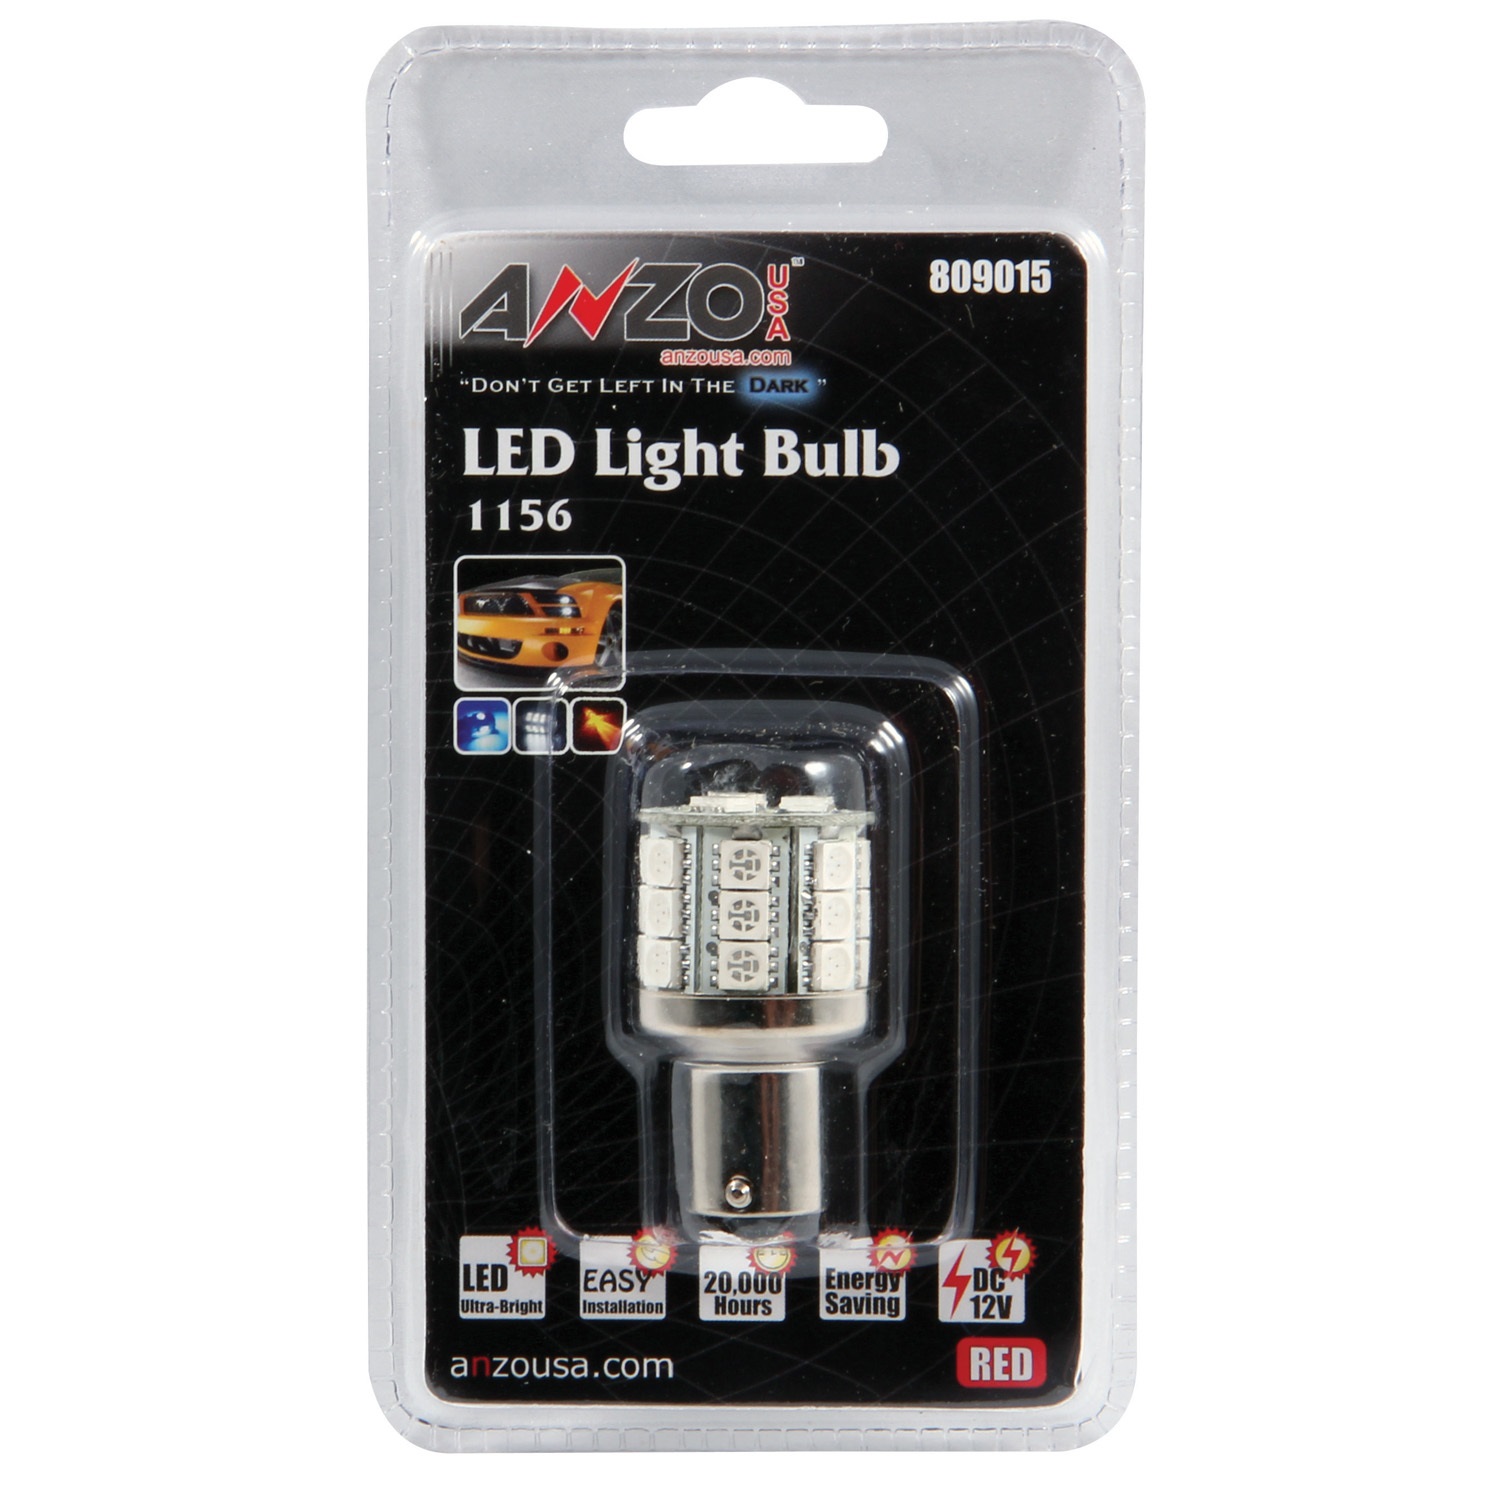 Anzo USA Anzo USA 809015 LED Replacement Bulb